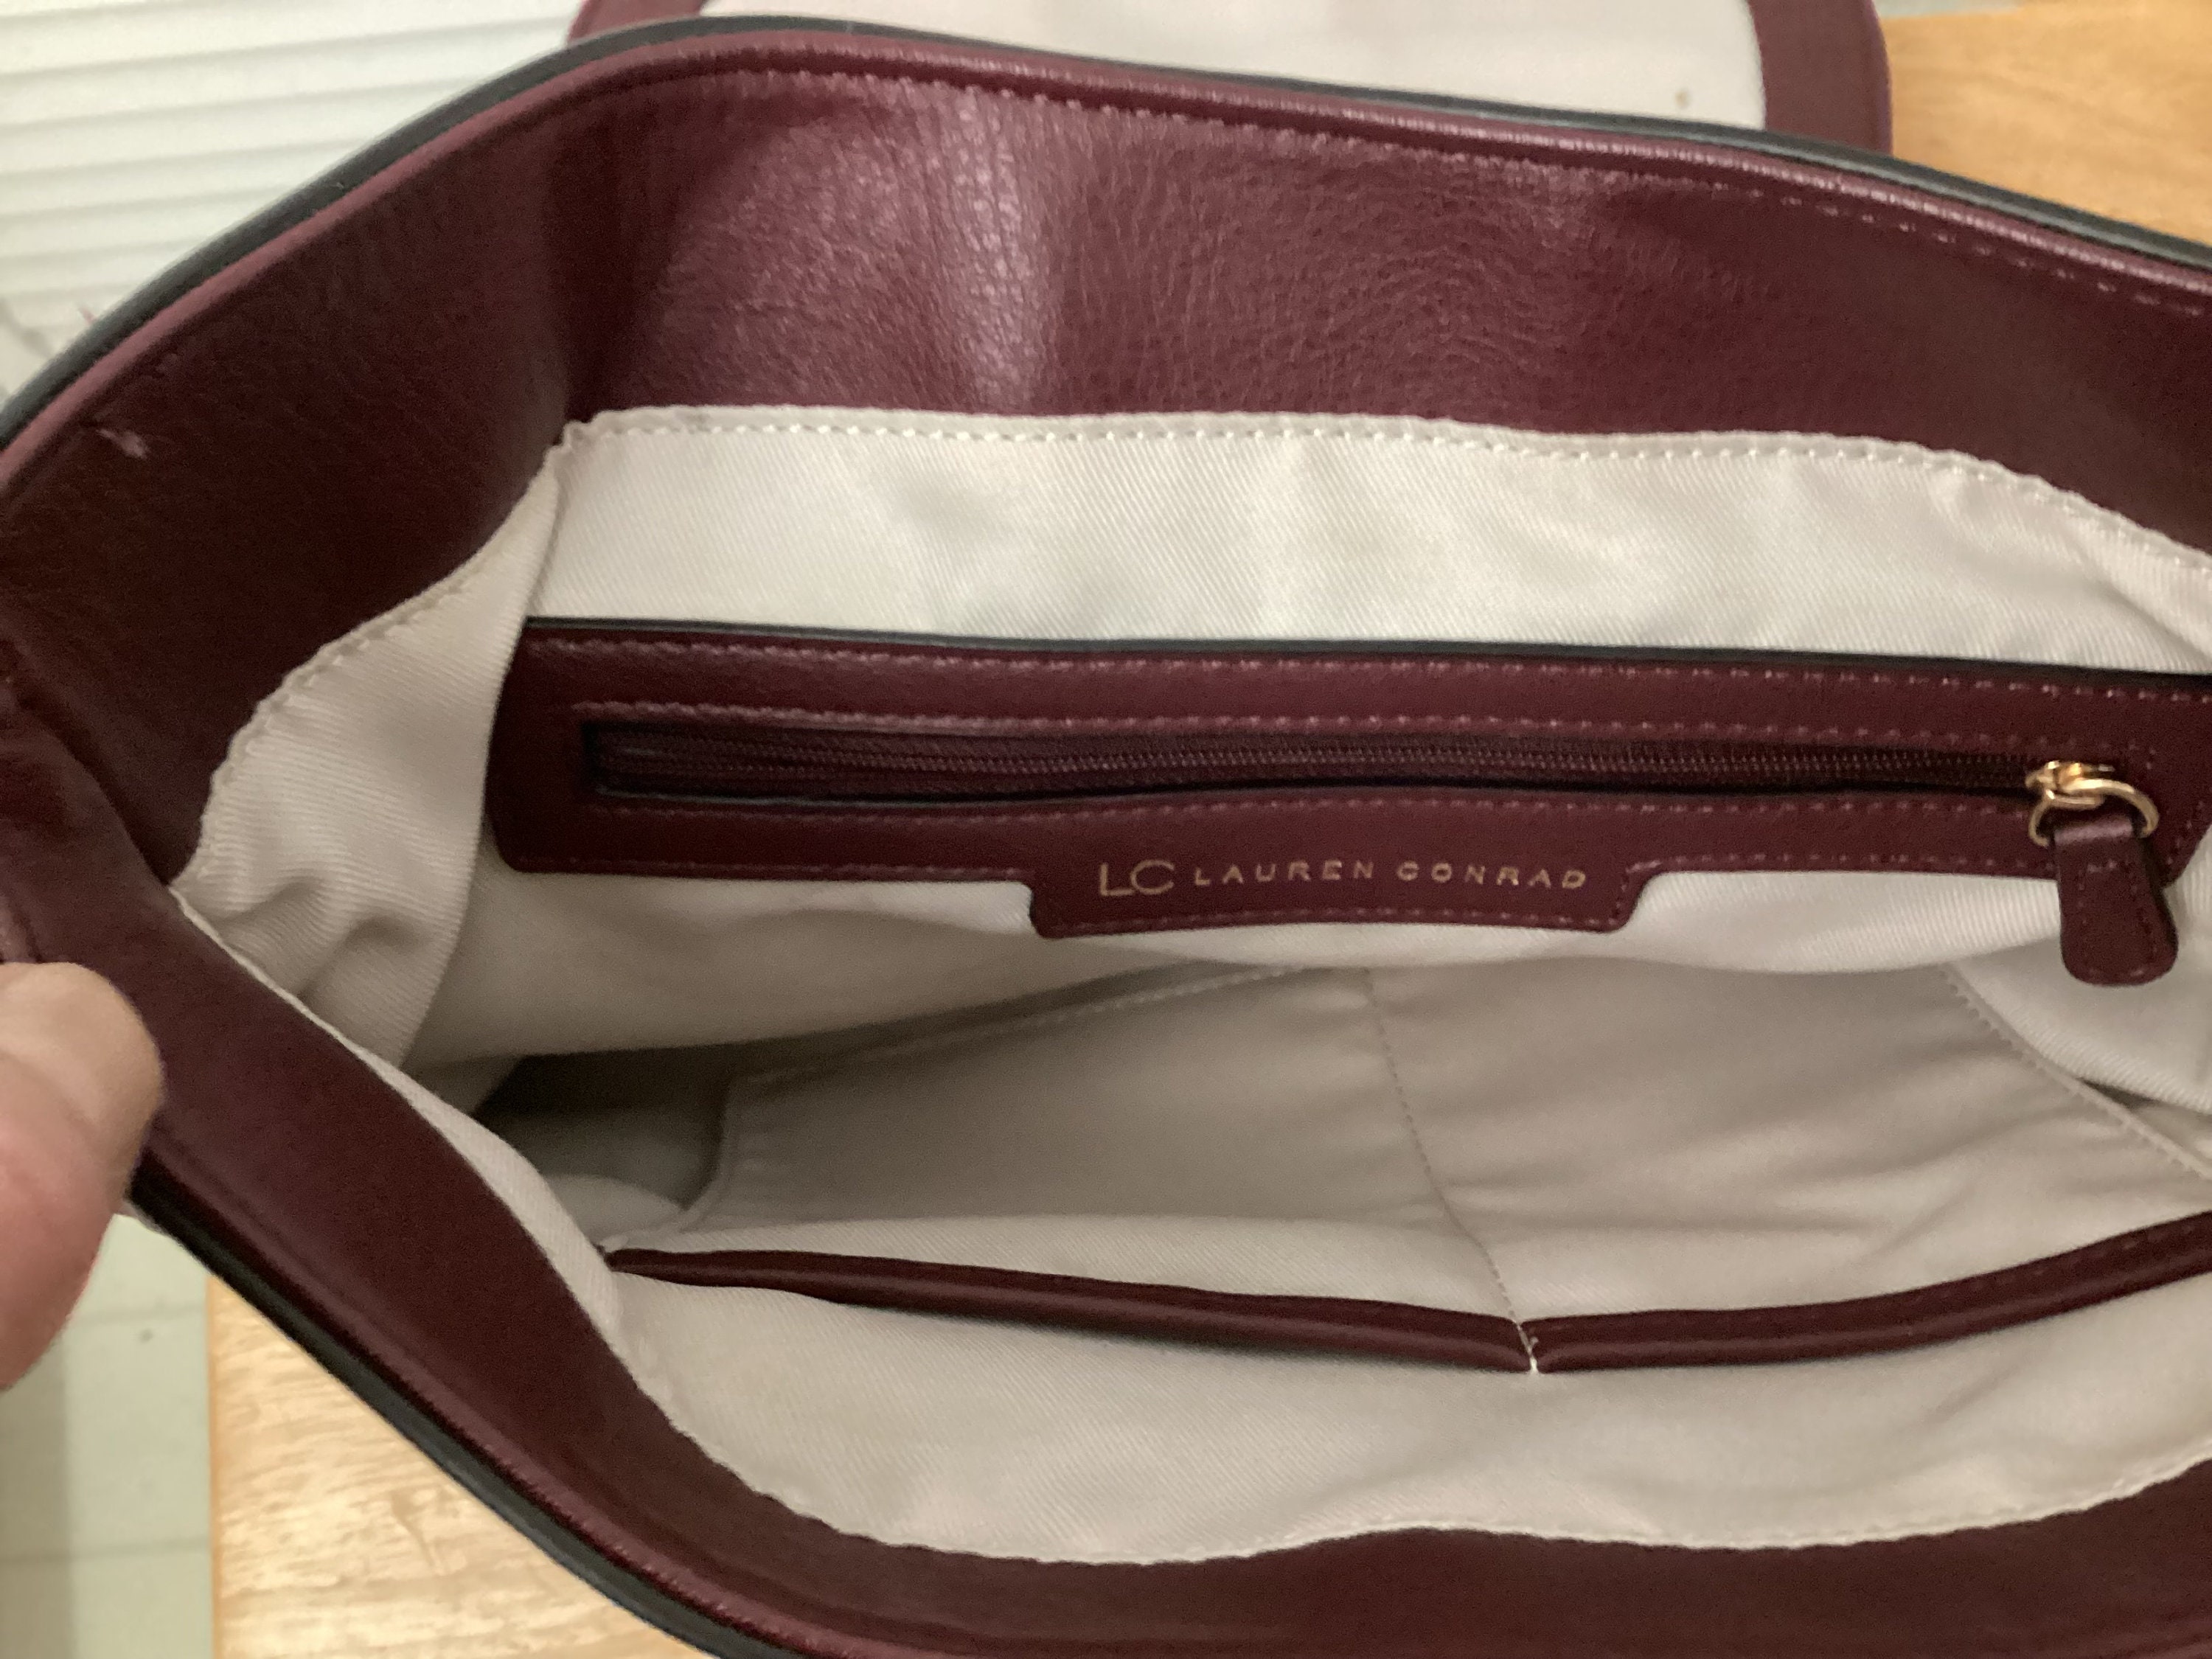 LC Lauren Conrad Saddle Handbags